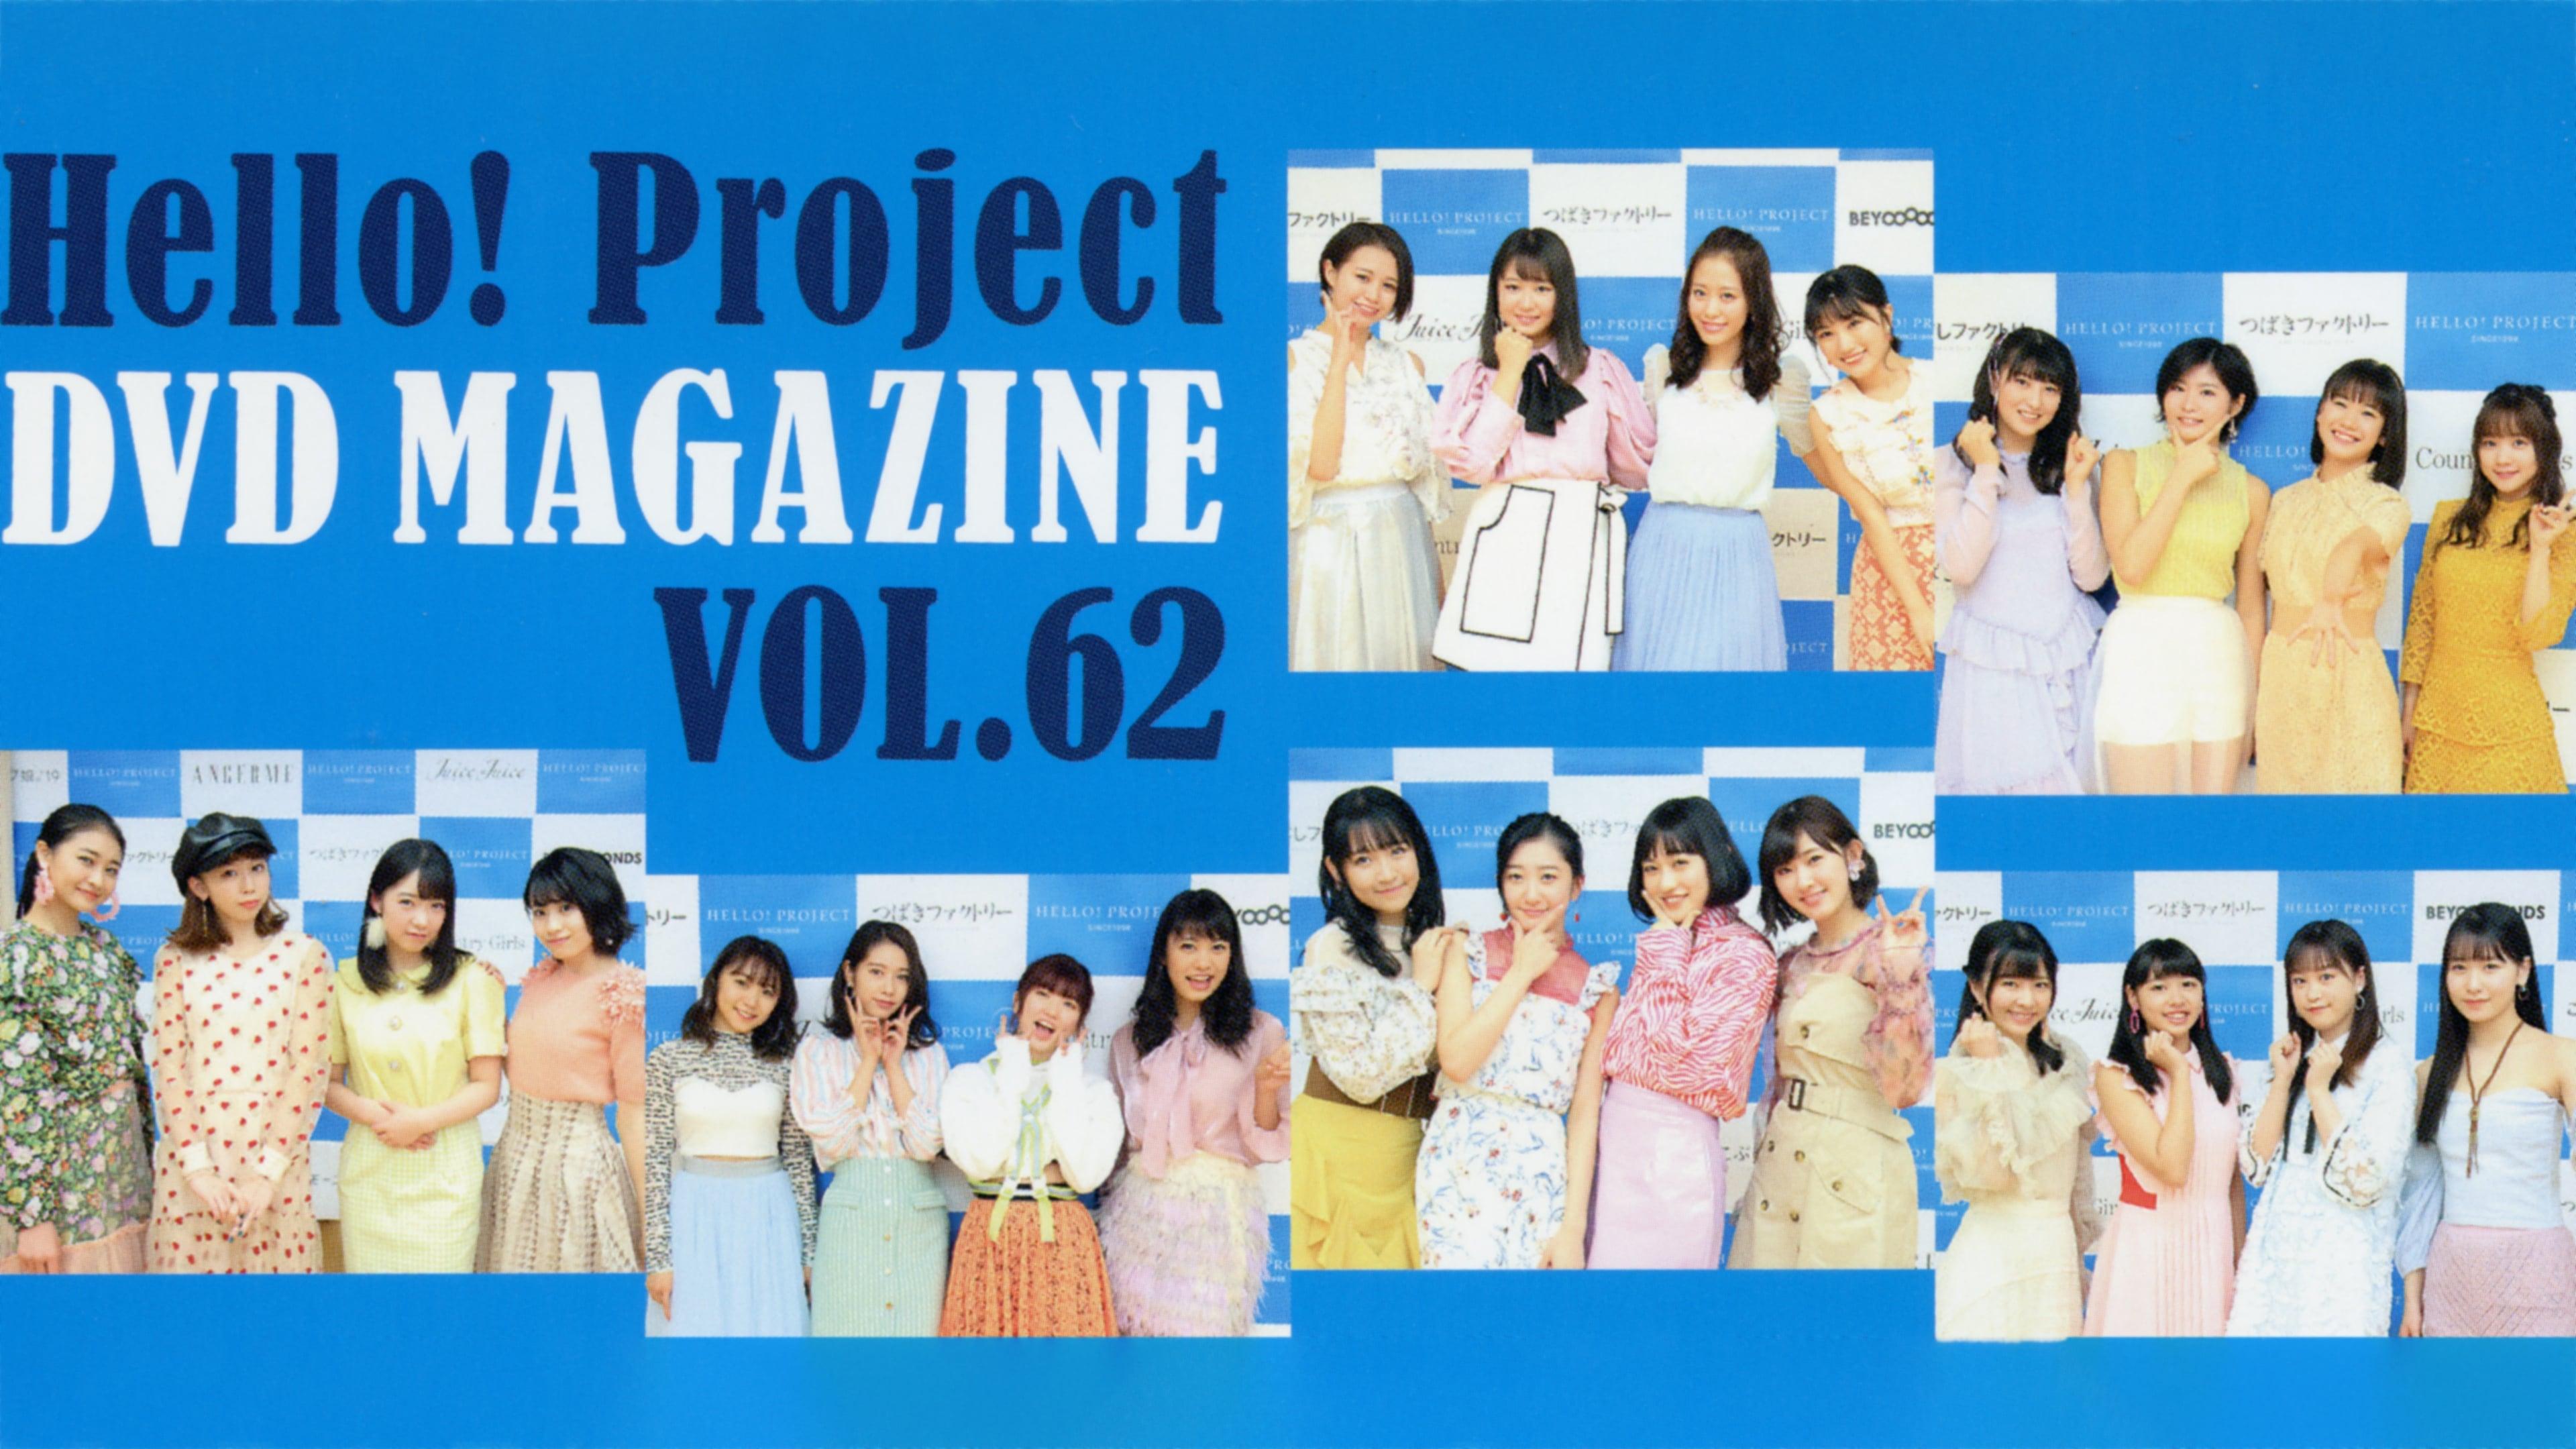 Hello! Project DVD Magazine Vol.62 backdrop